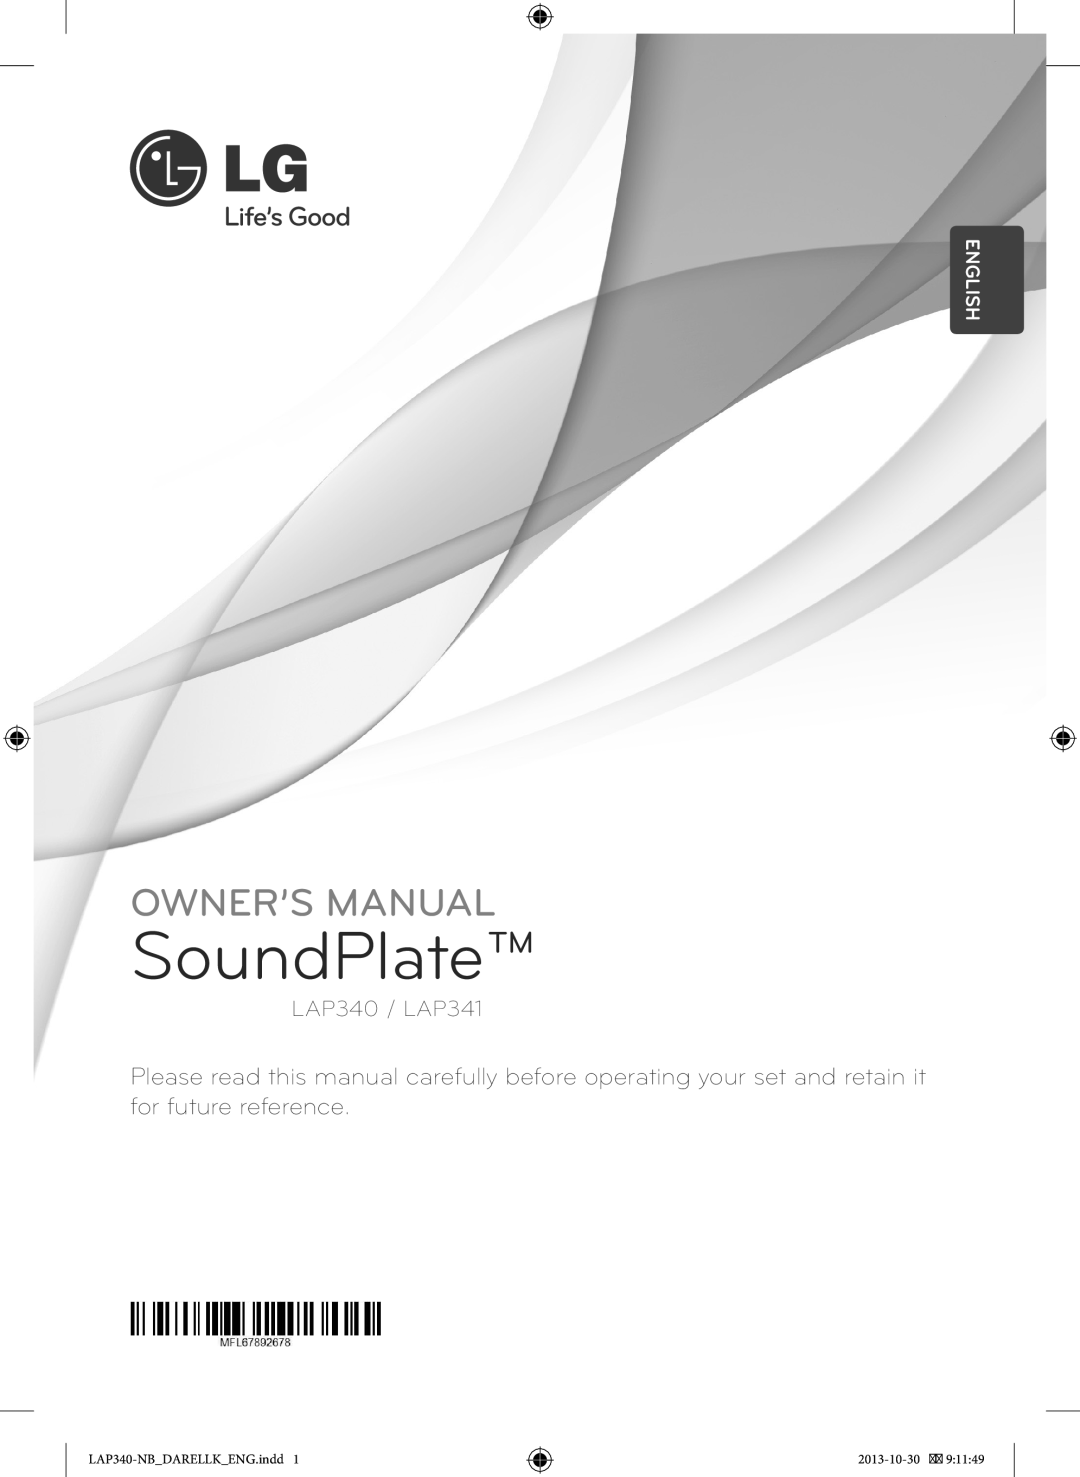 LG Electronics owner manual SoundPlate, LAP340 / LAP341, English, LAP340-NBDARELLKENG.indd, 2013-10-30 